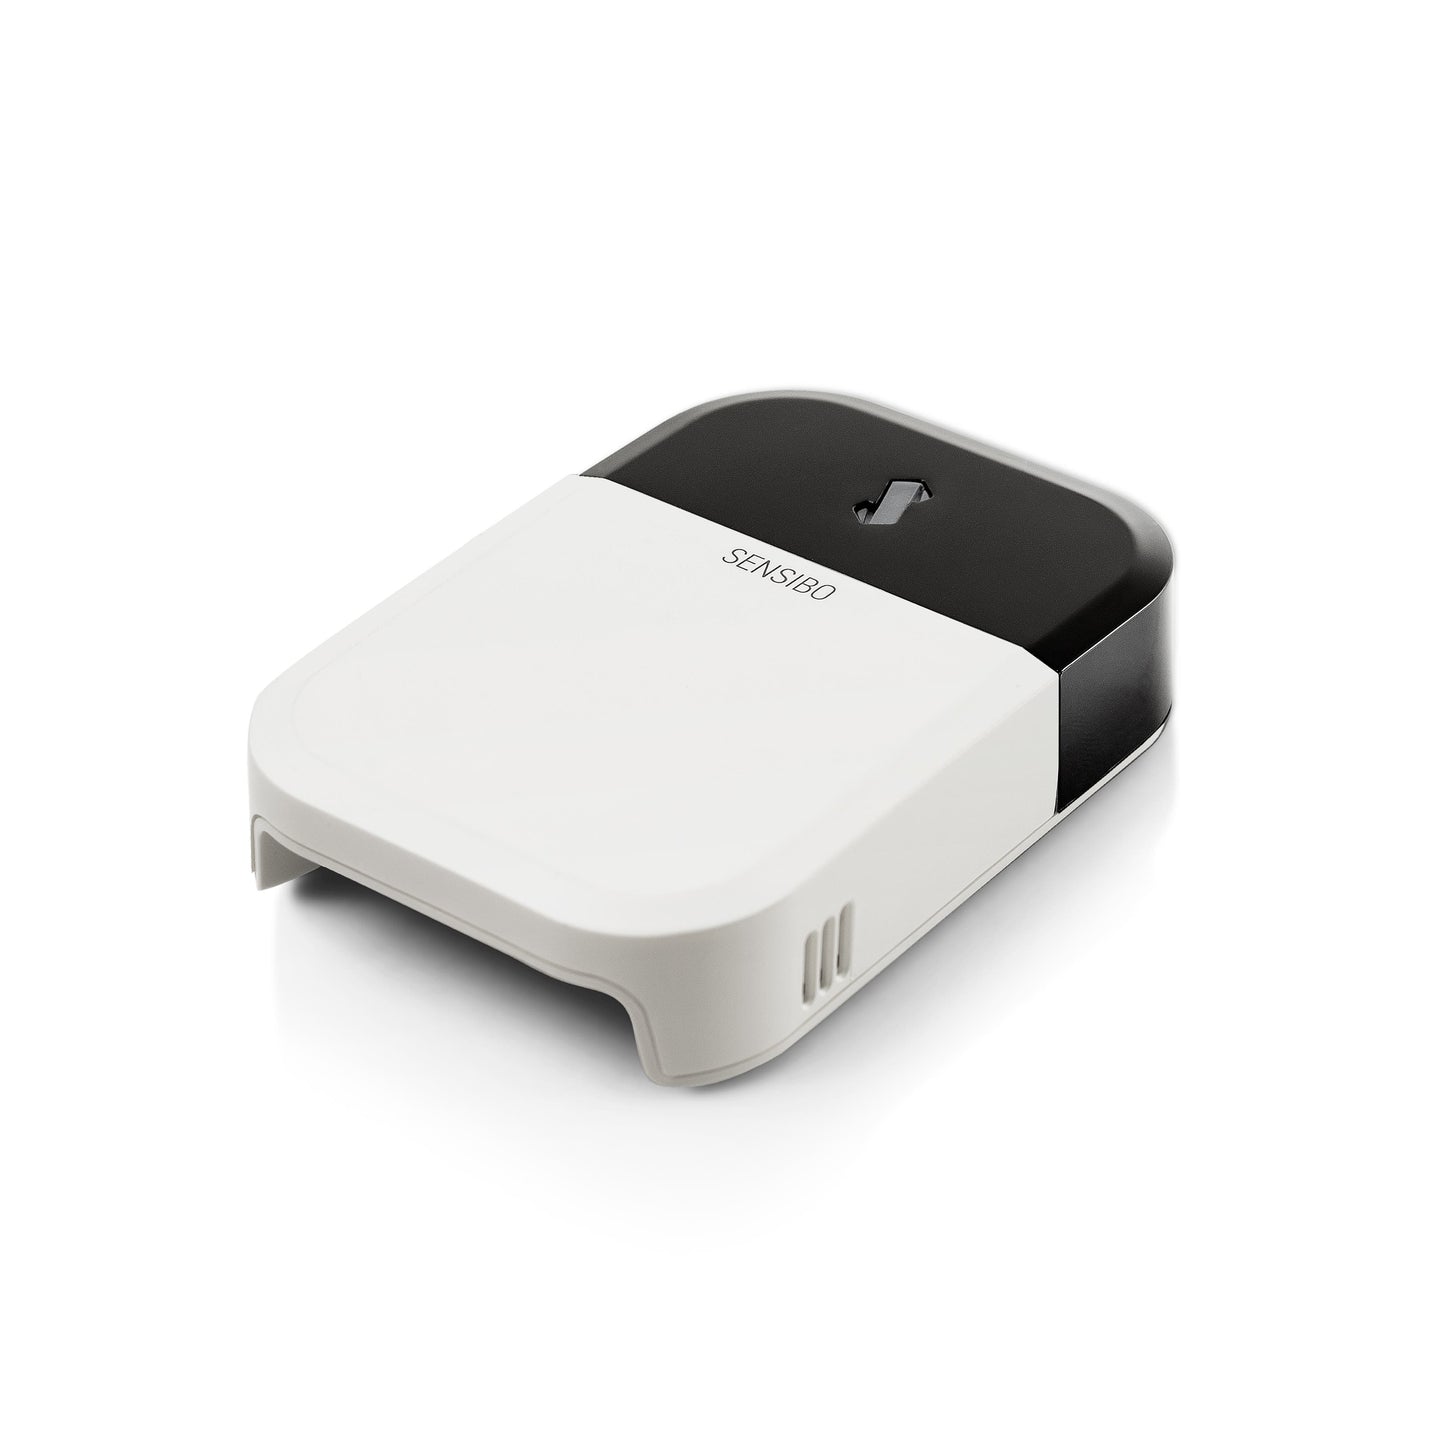 Sensibo Sky - Smart Air Conditioner WiFi Controller (White)